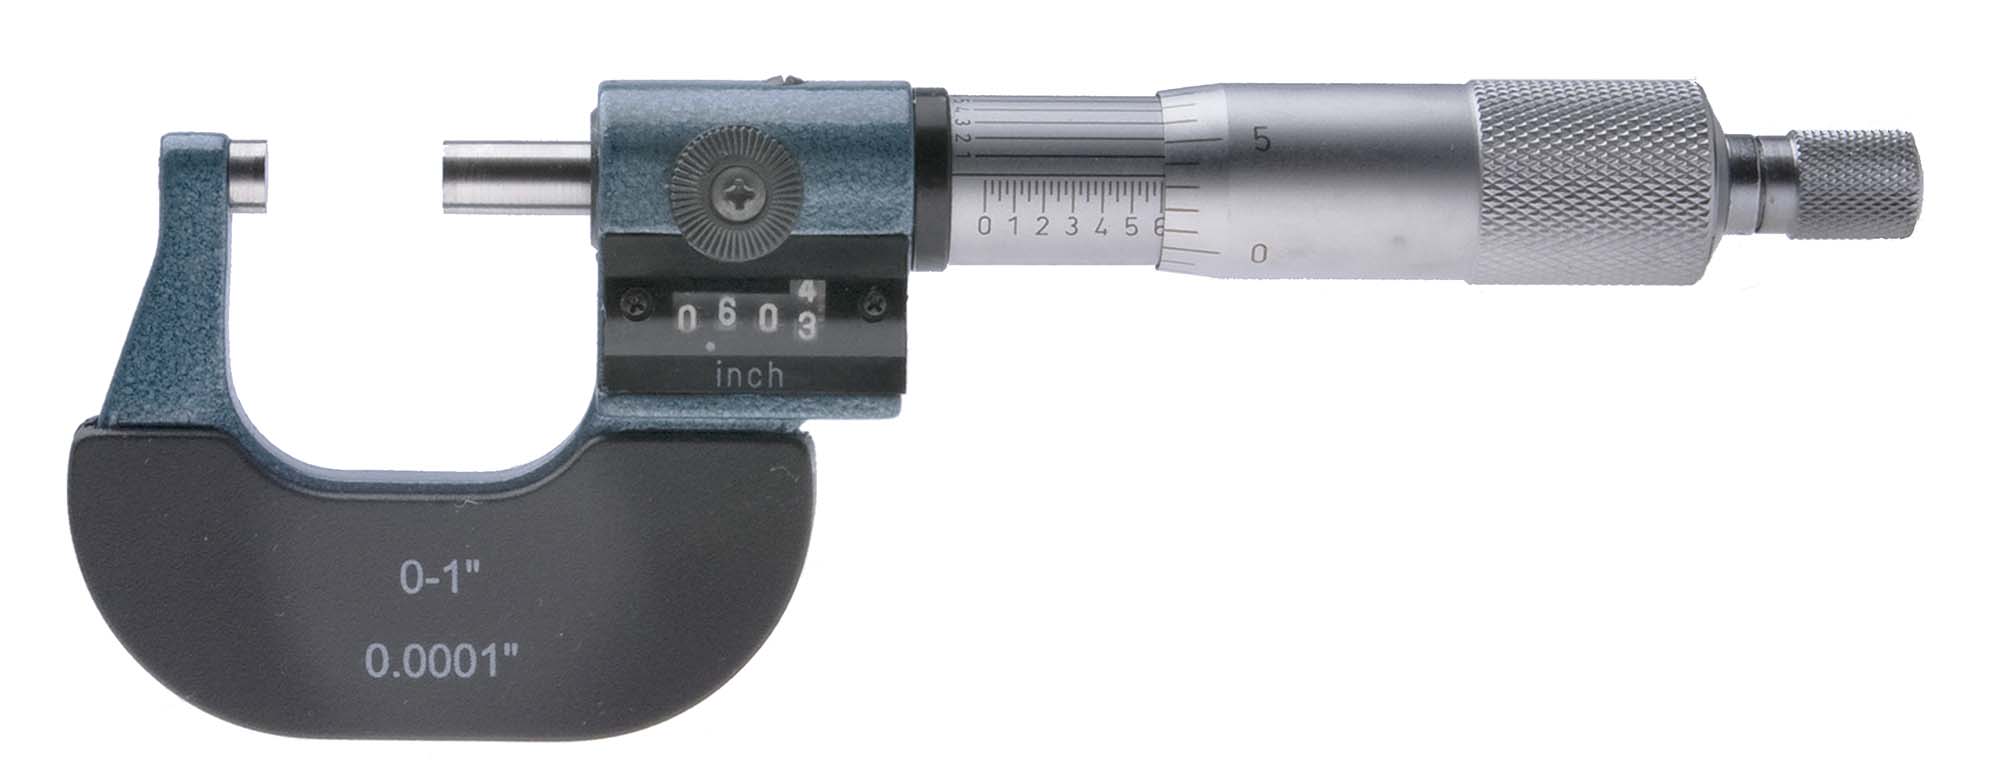 .0001 VME-01 0-1 VME Outside Micrometer 